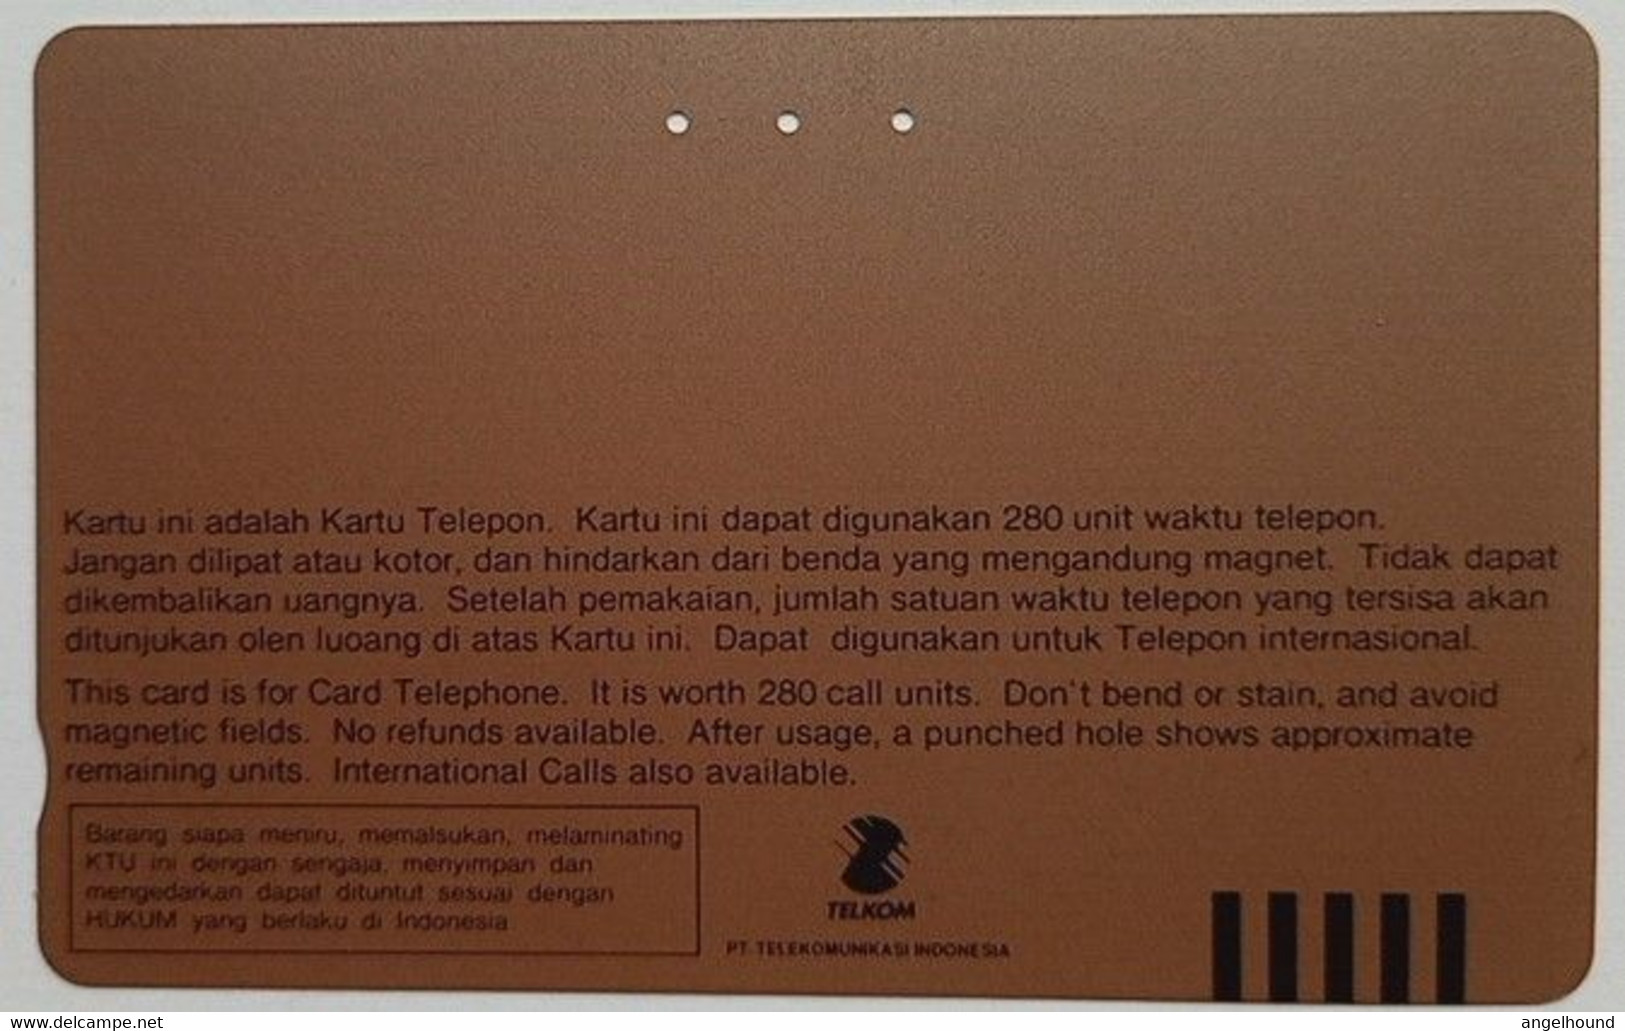 Indonesia 280 Units " Temaram Mentari ( Sunset ) " - Indonesië